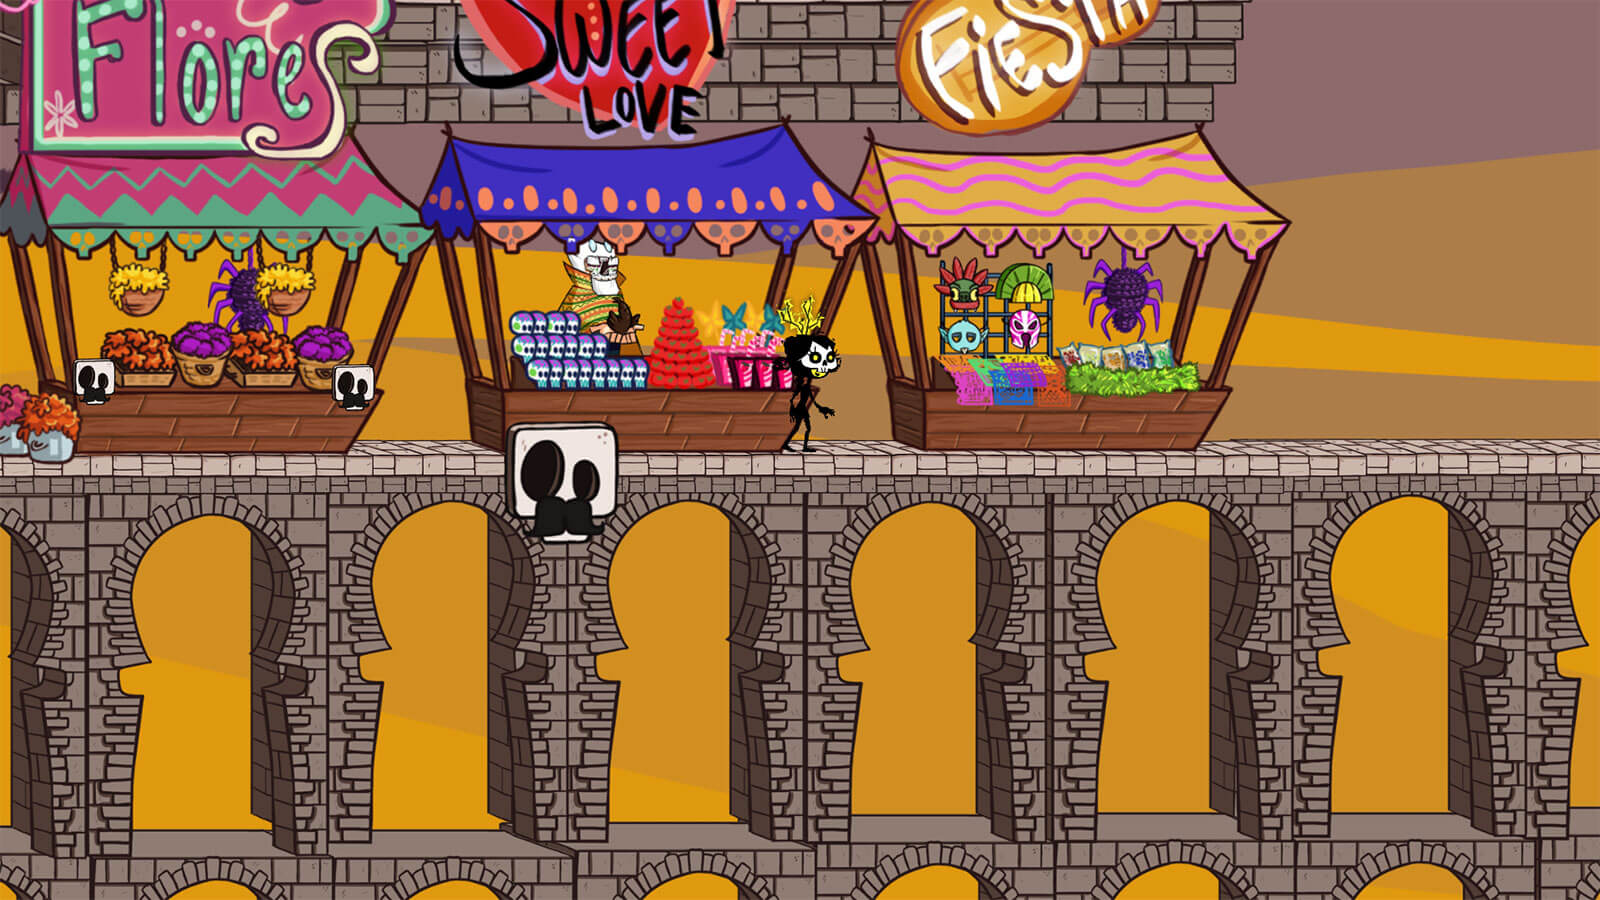 Player walks atop aqueduct lined with street vendor kiosks